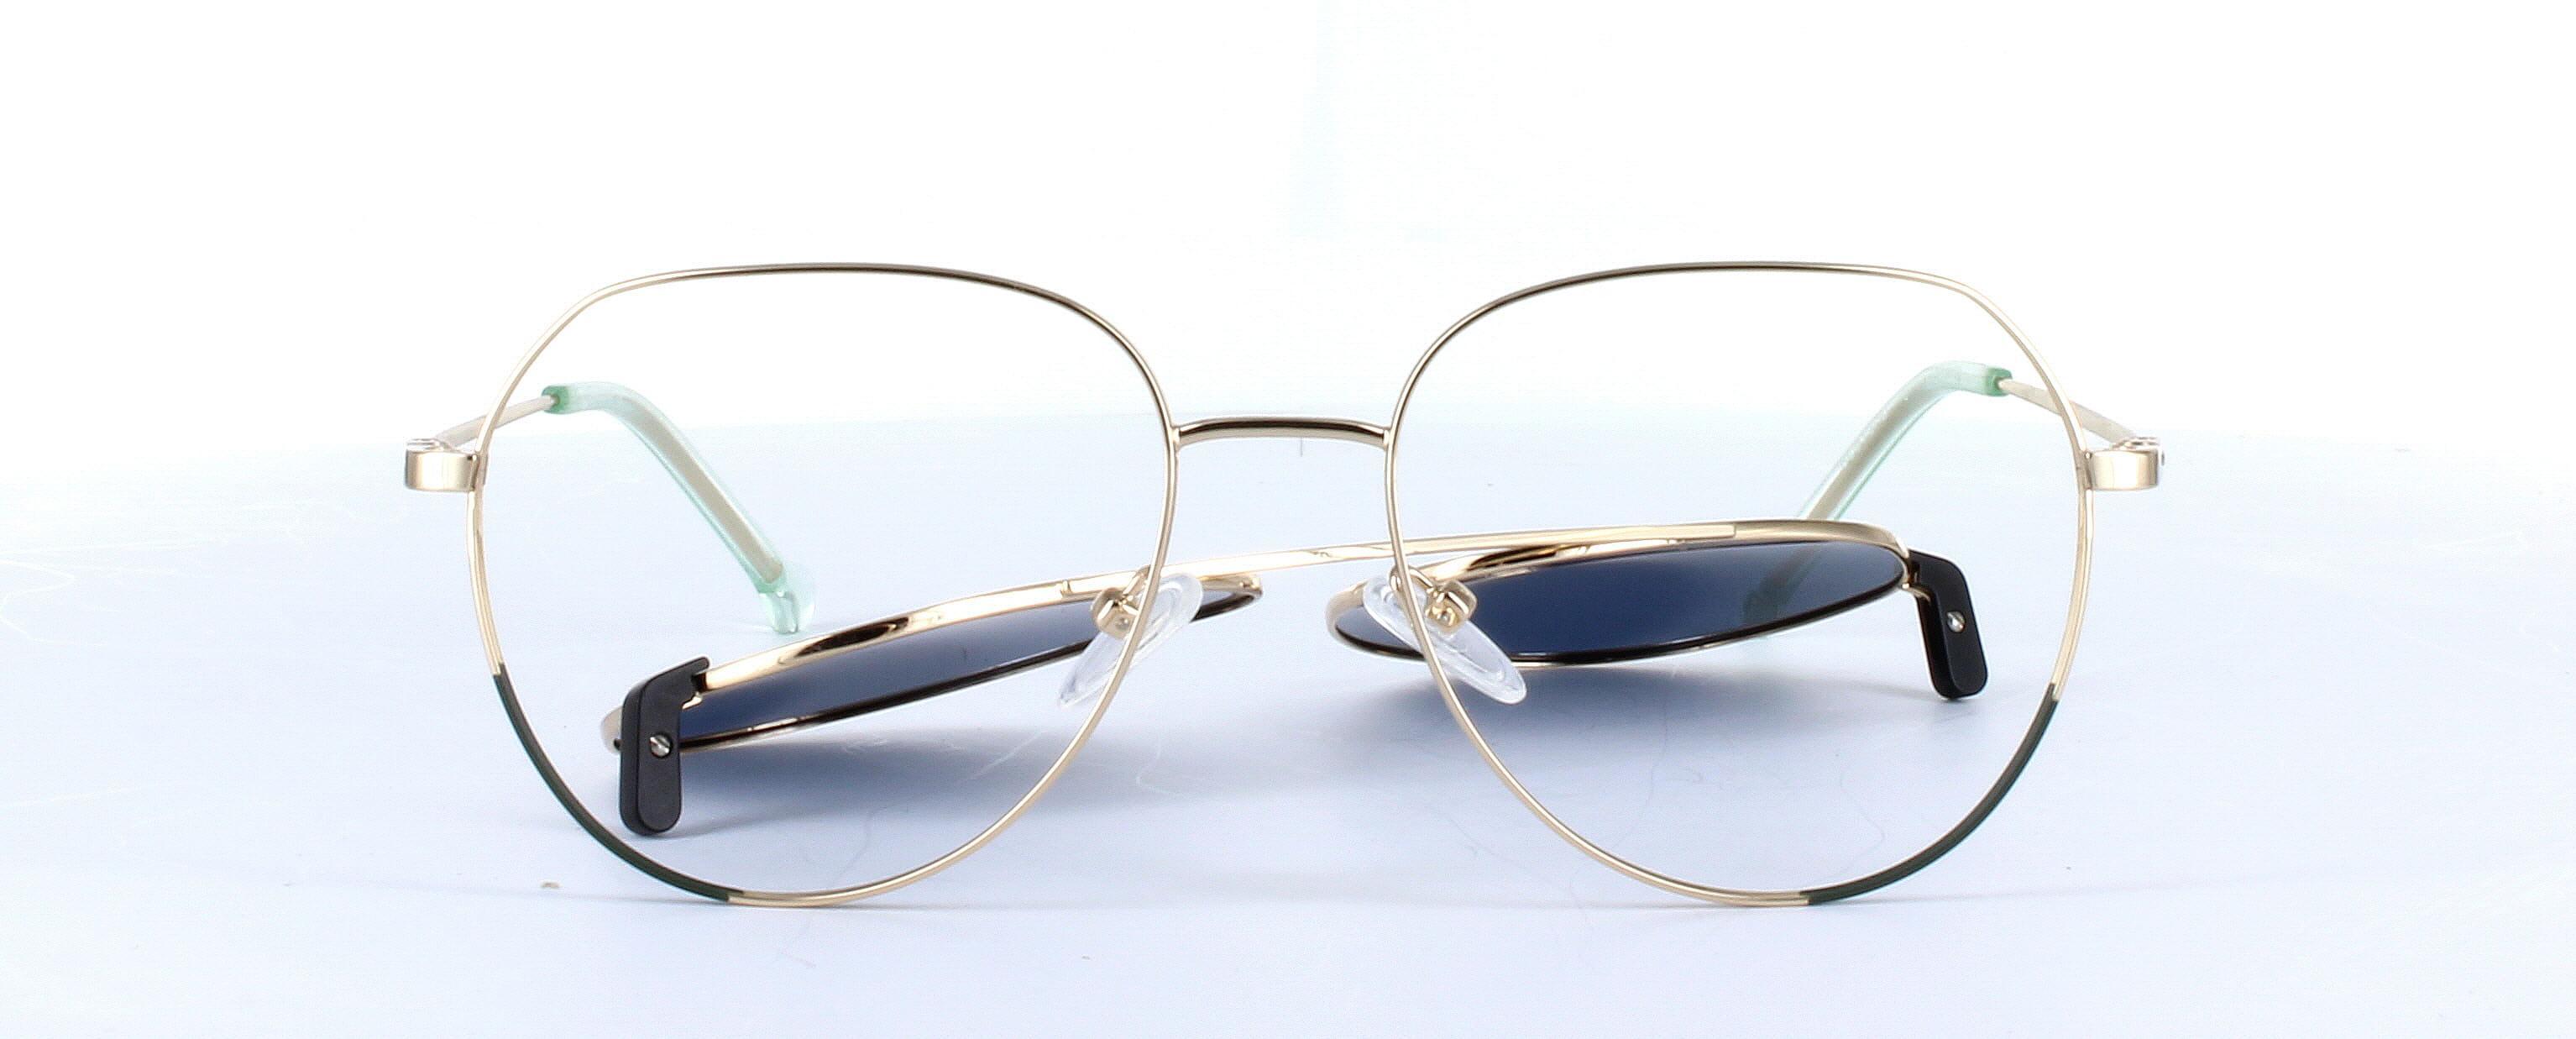 Eyecroxx 612 Gold and Black Full Rim Metal Glasses - Image View 5